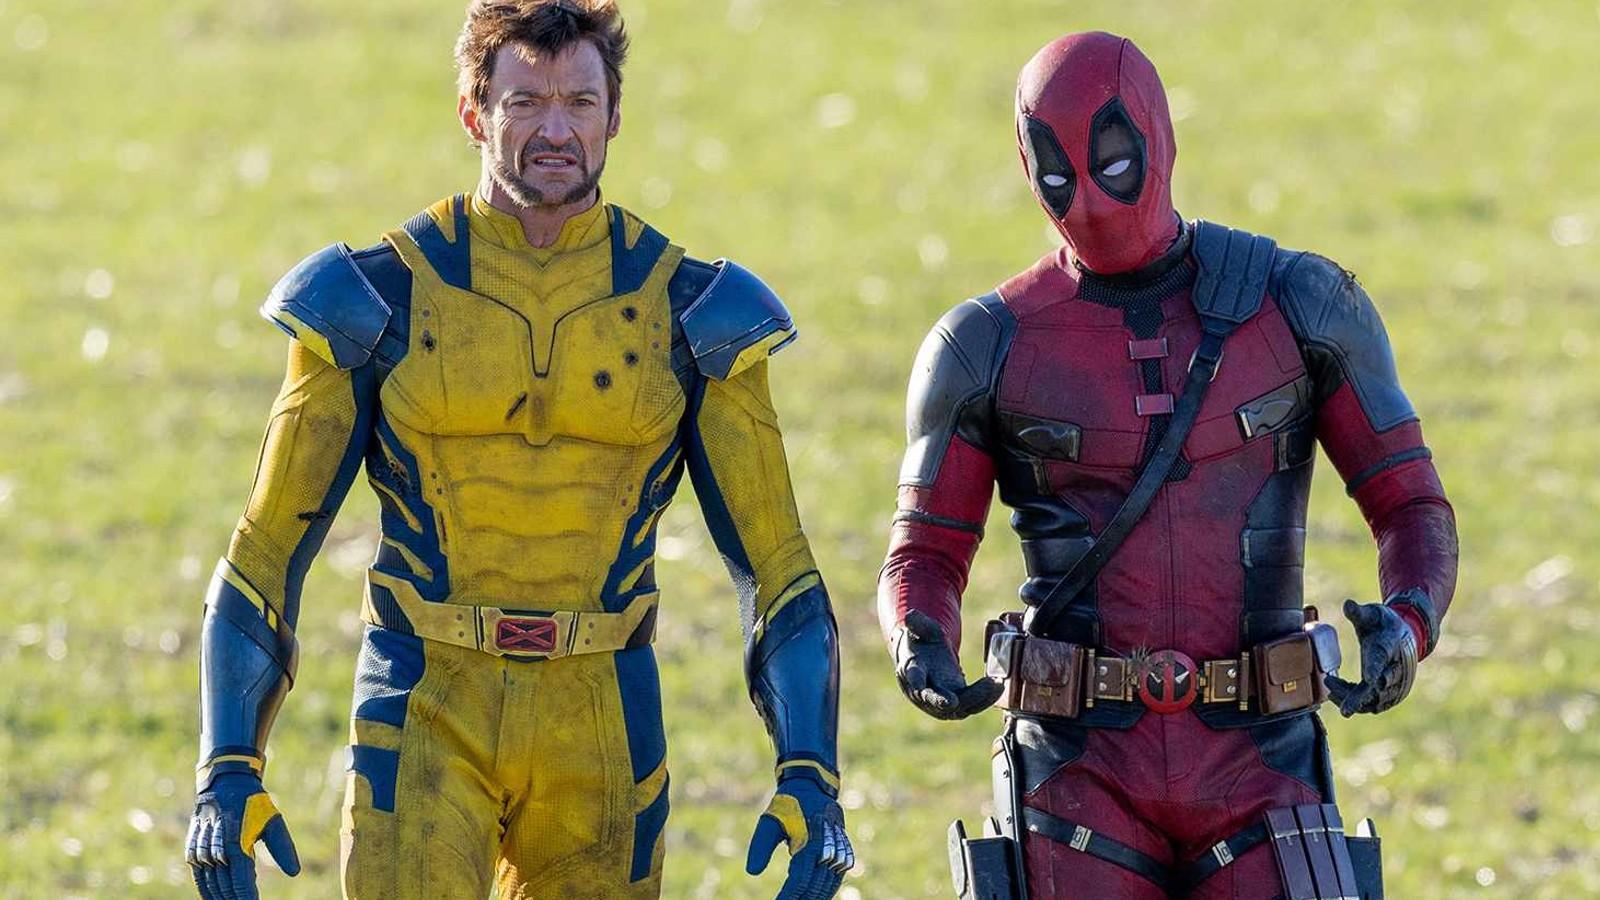 Deadpool & Wolverine chatting in a field.